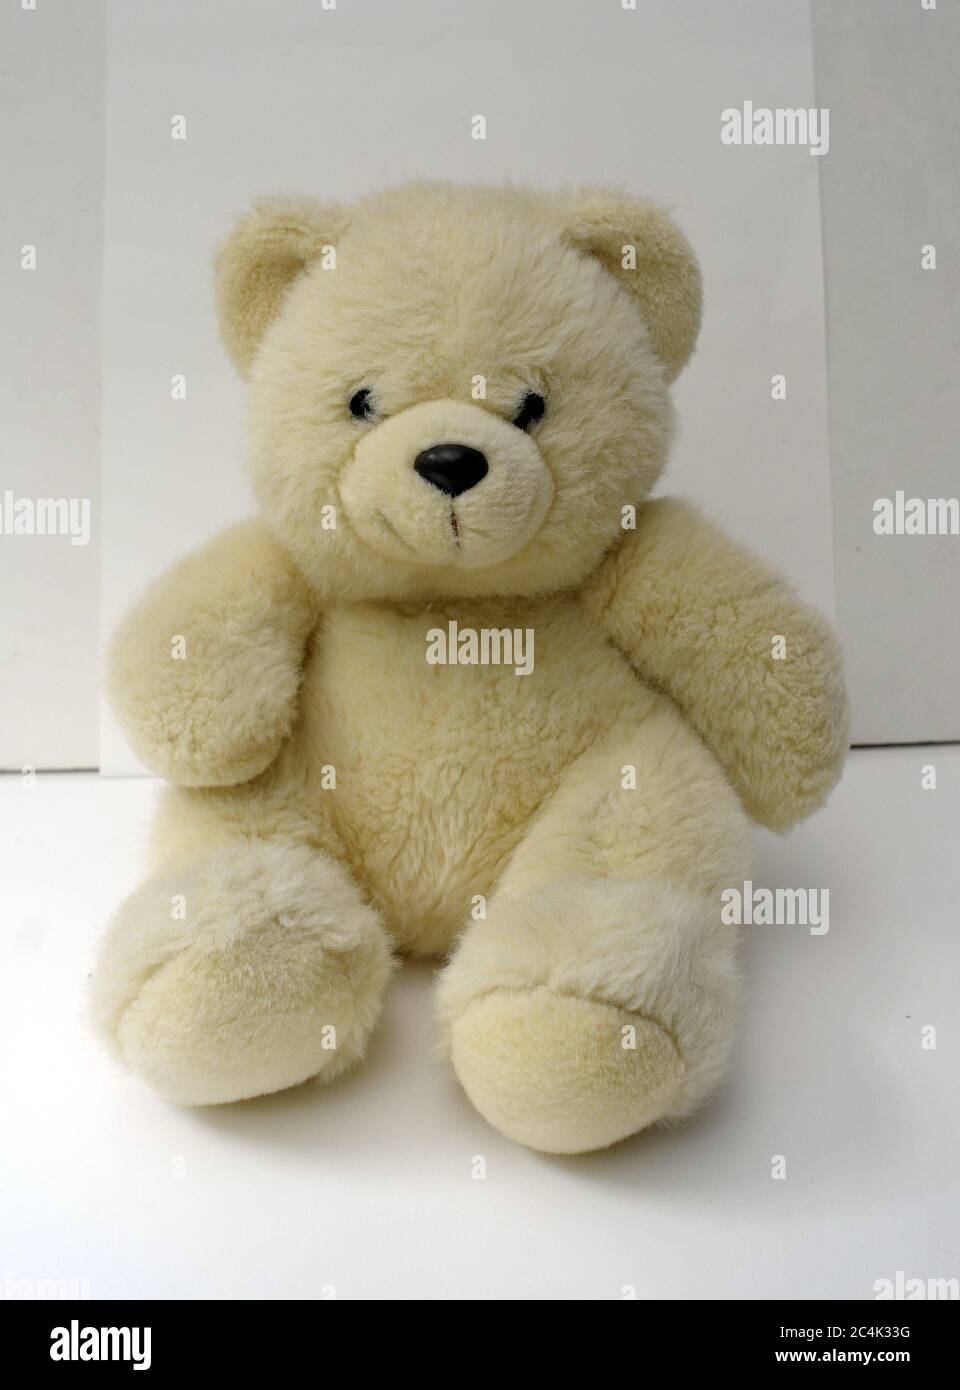 teddy bear toy Stock Photo